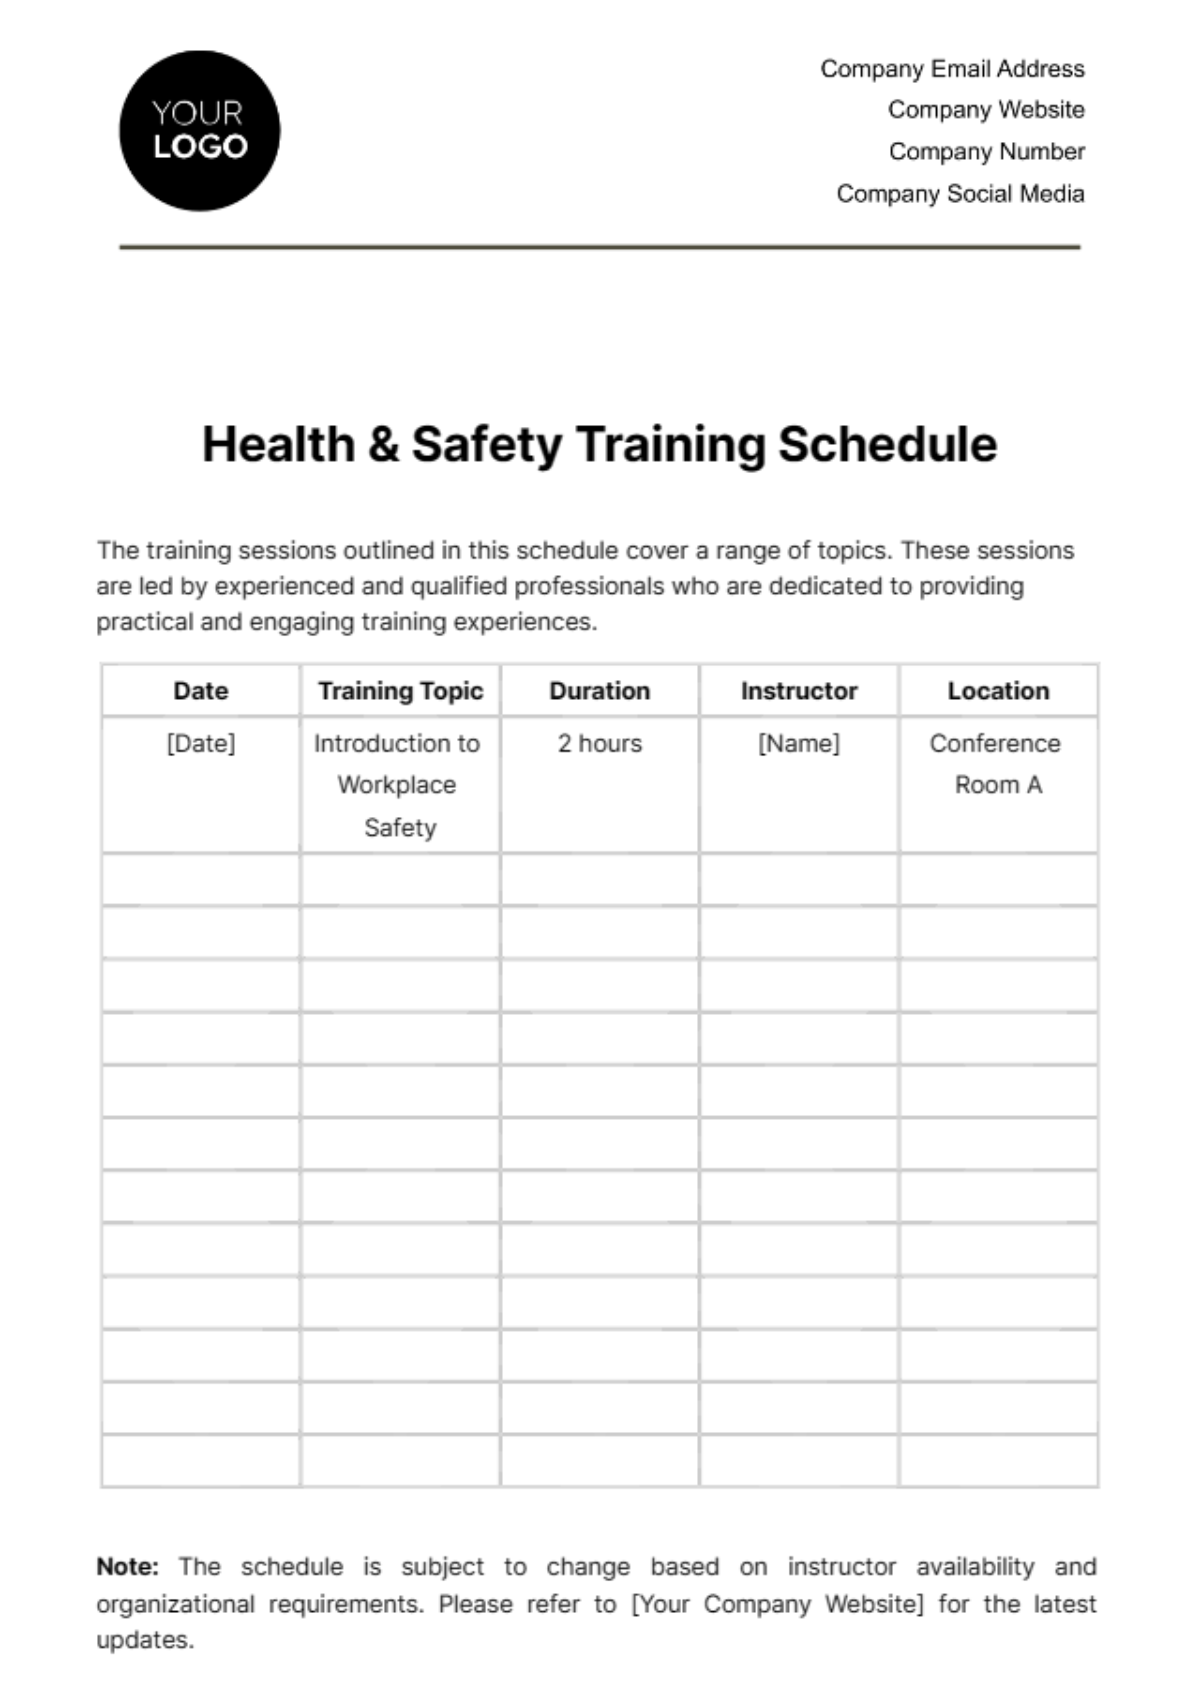 Health & Safety Training Schedule Template